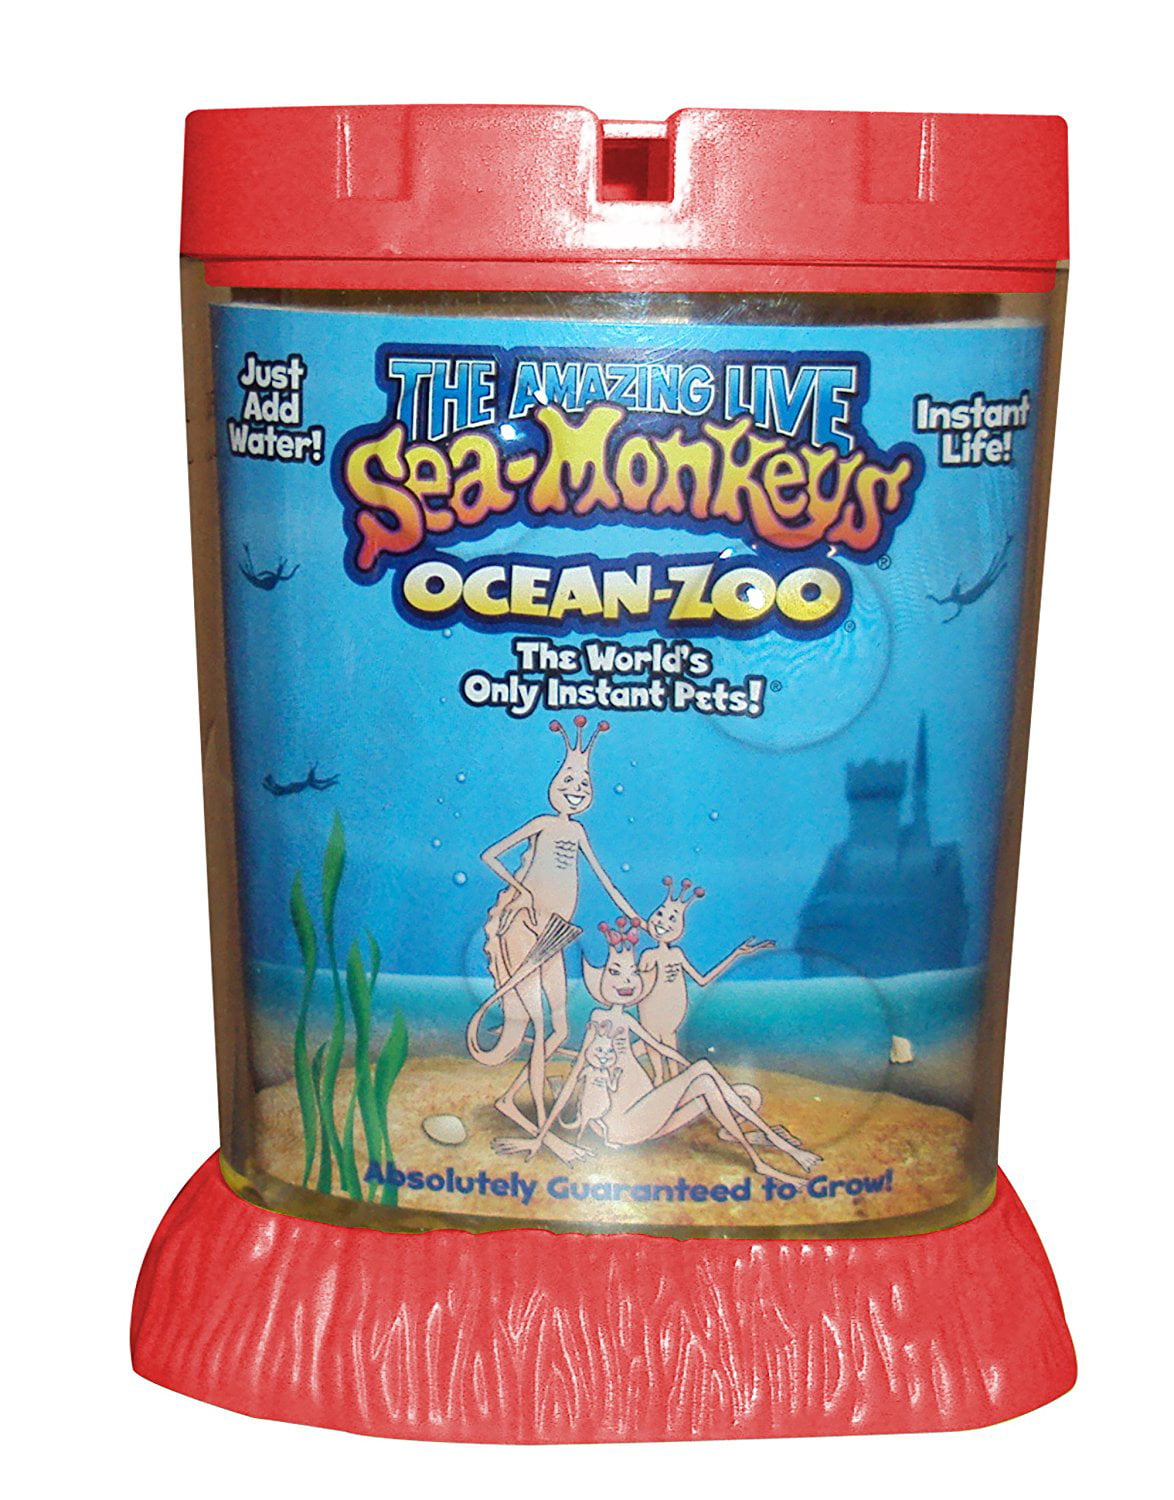 Details about   Aquarium Marine Sea Monkeys Live Ocean Monkey Tank Q2B Toy Y4A8 Habitat Q5N3 